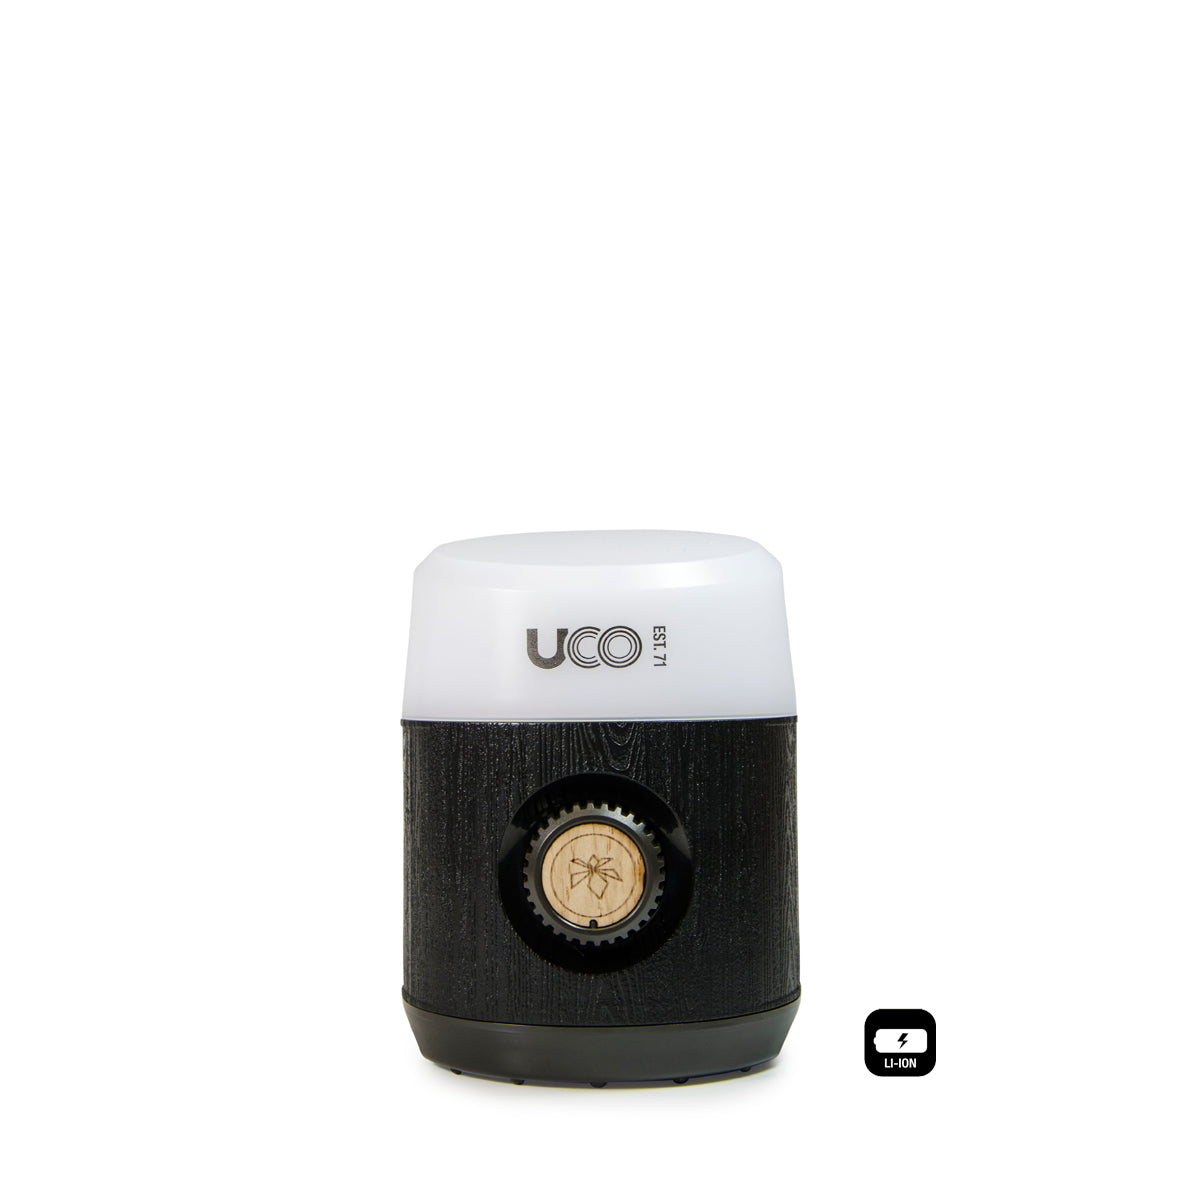 UCO Sprout + Mini Lantern - Lithium, Blue